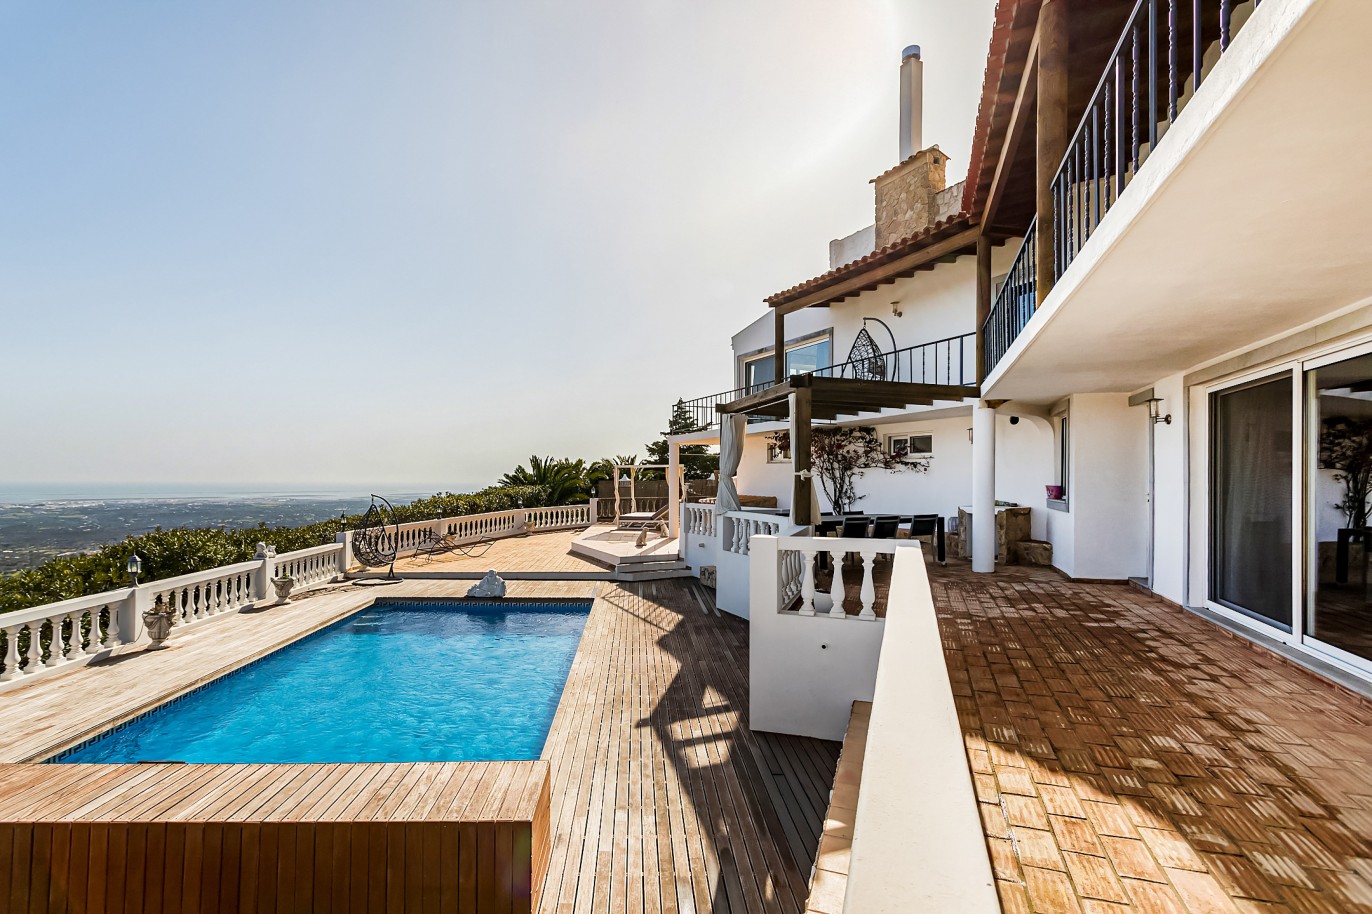 5 Bedroom Villa with sea view, for sale, in Faro, Algarve_218179